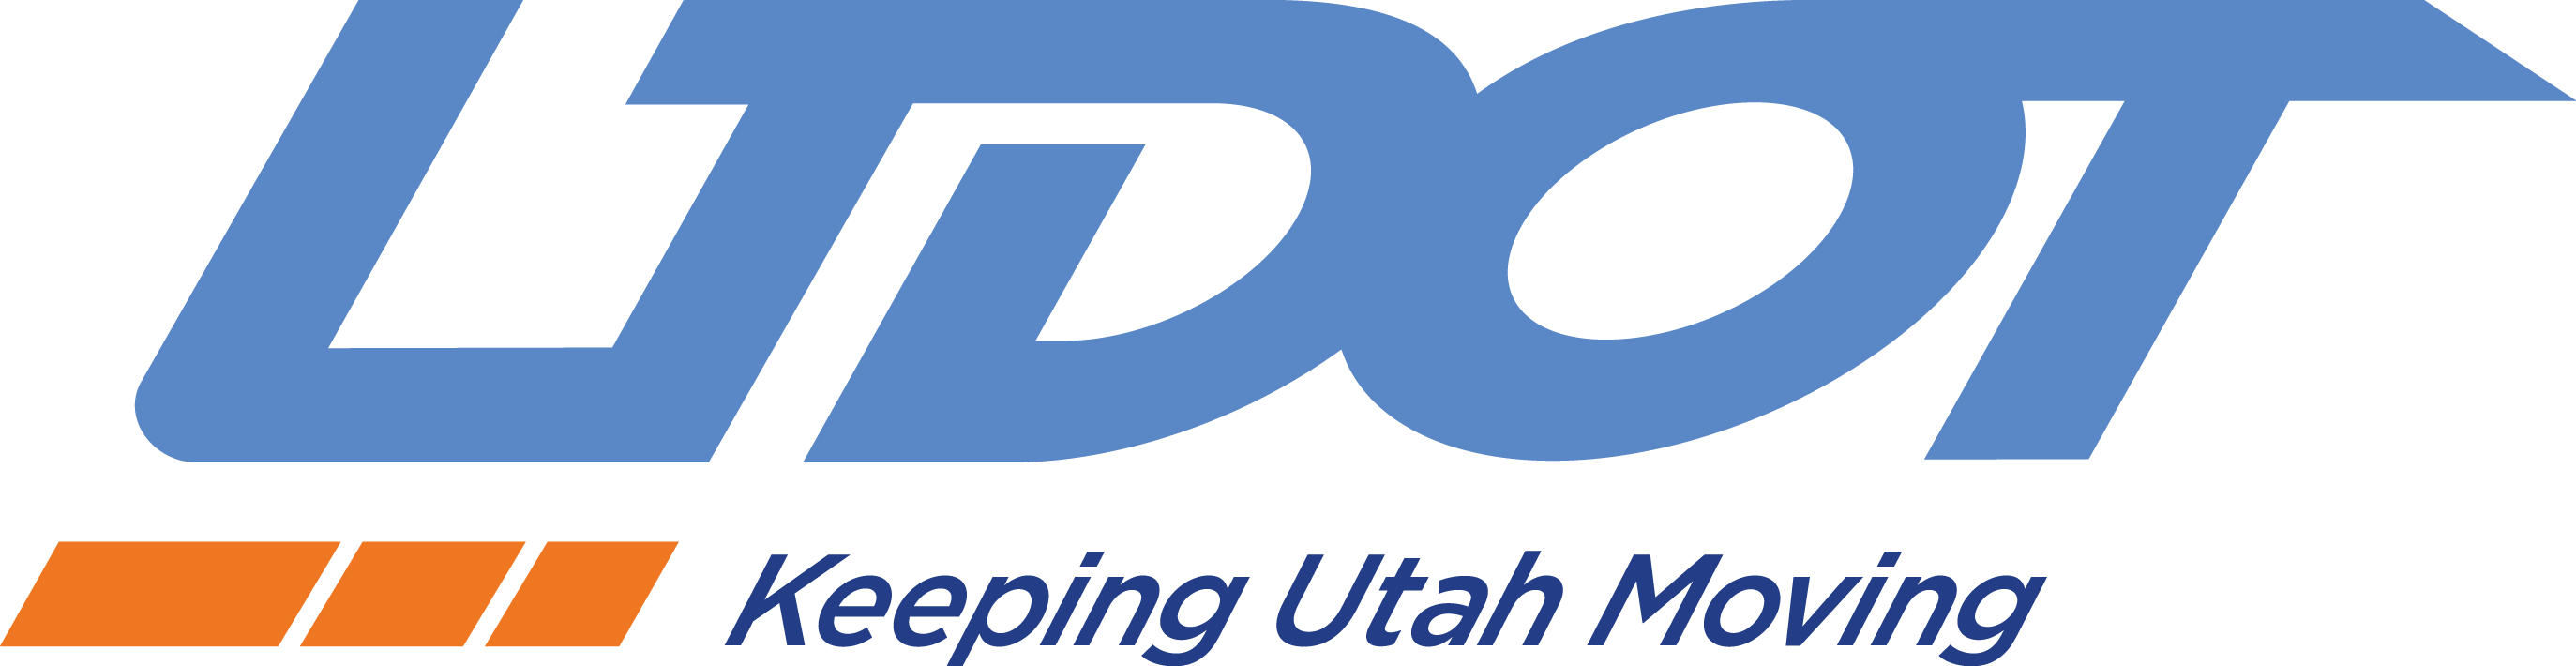 UDOT Logo - Utah Department of Transportation Downloads